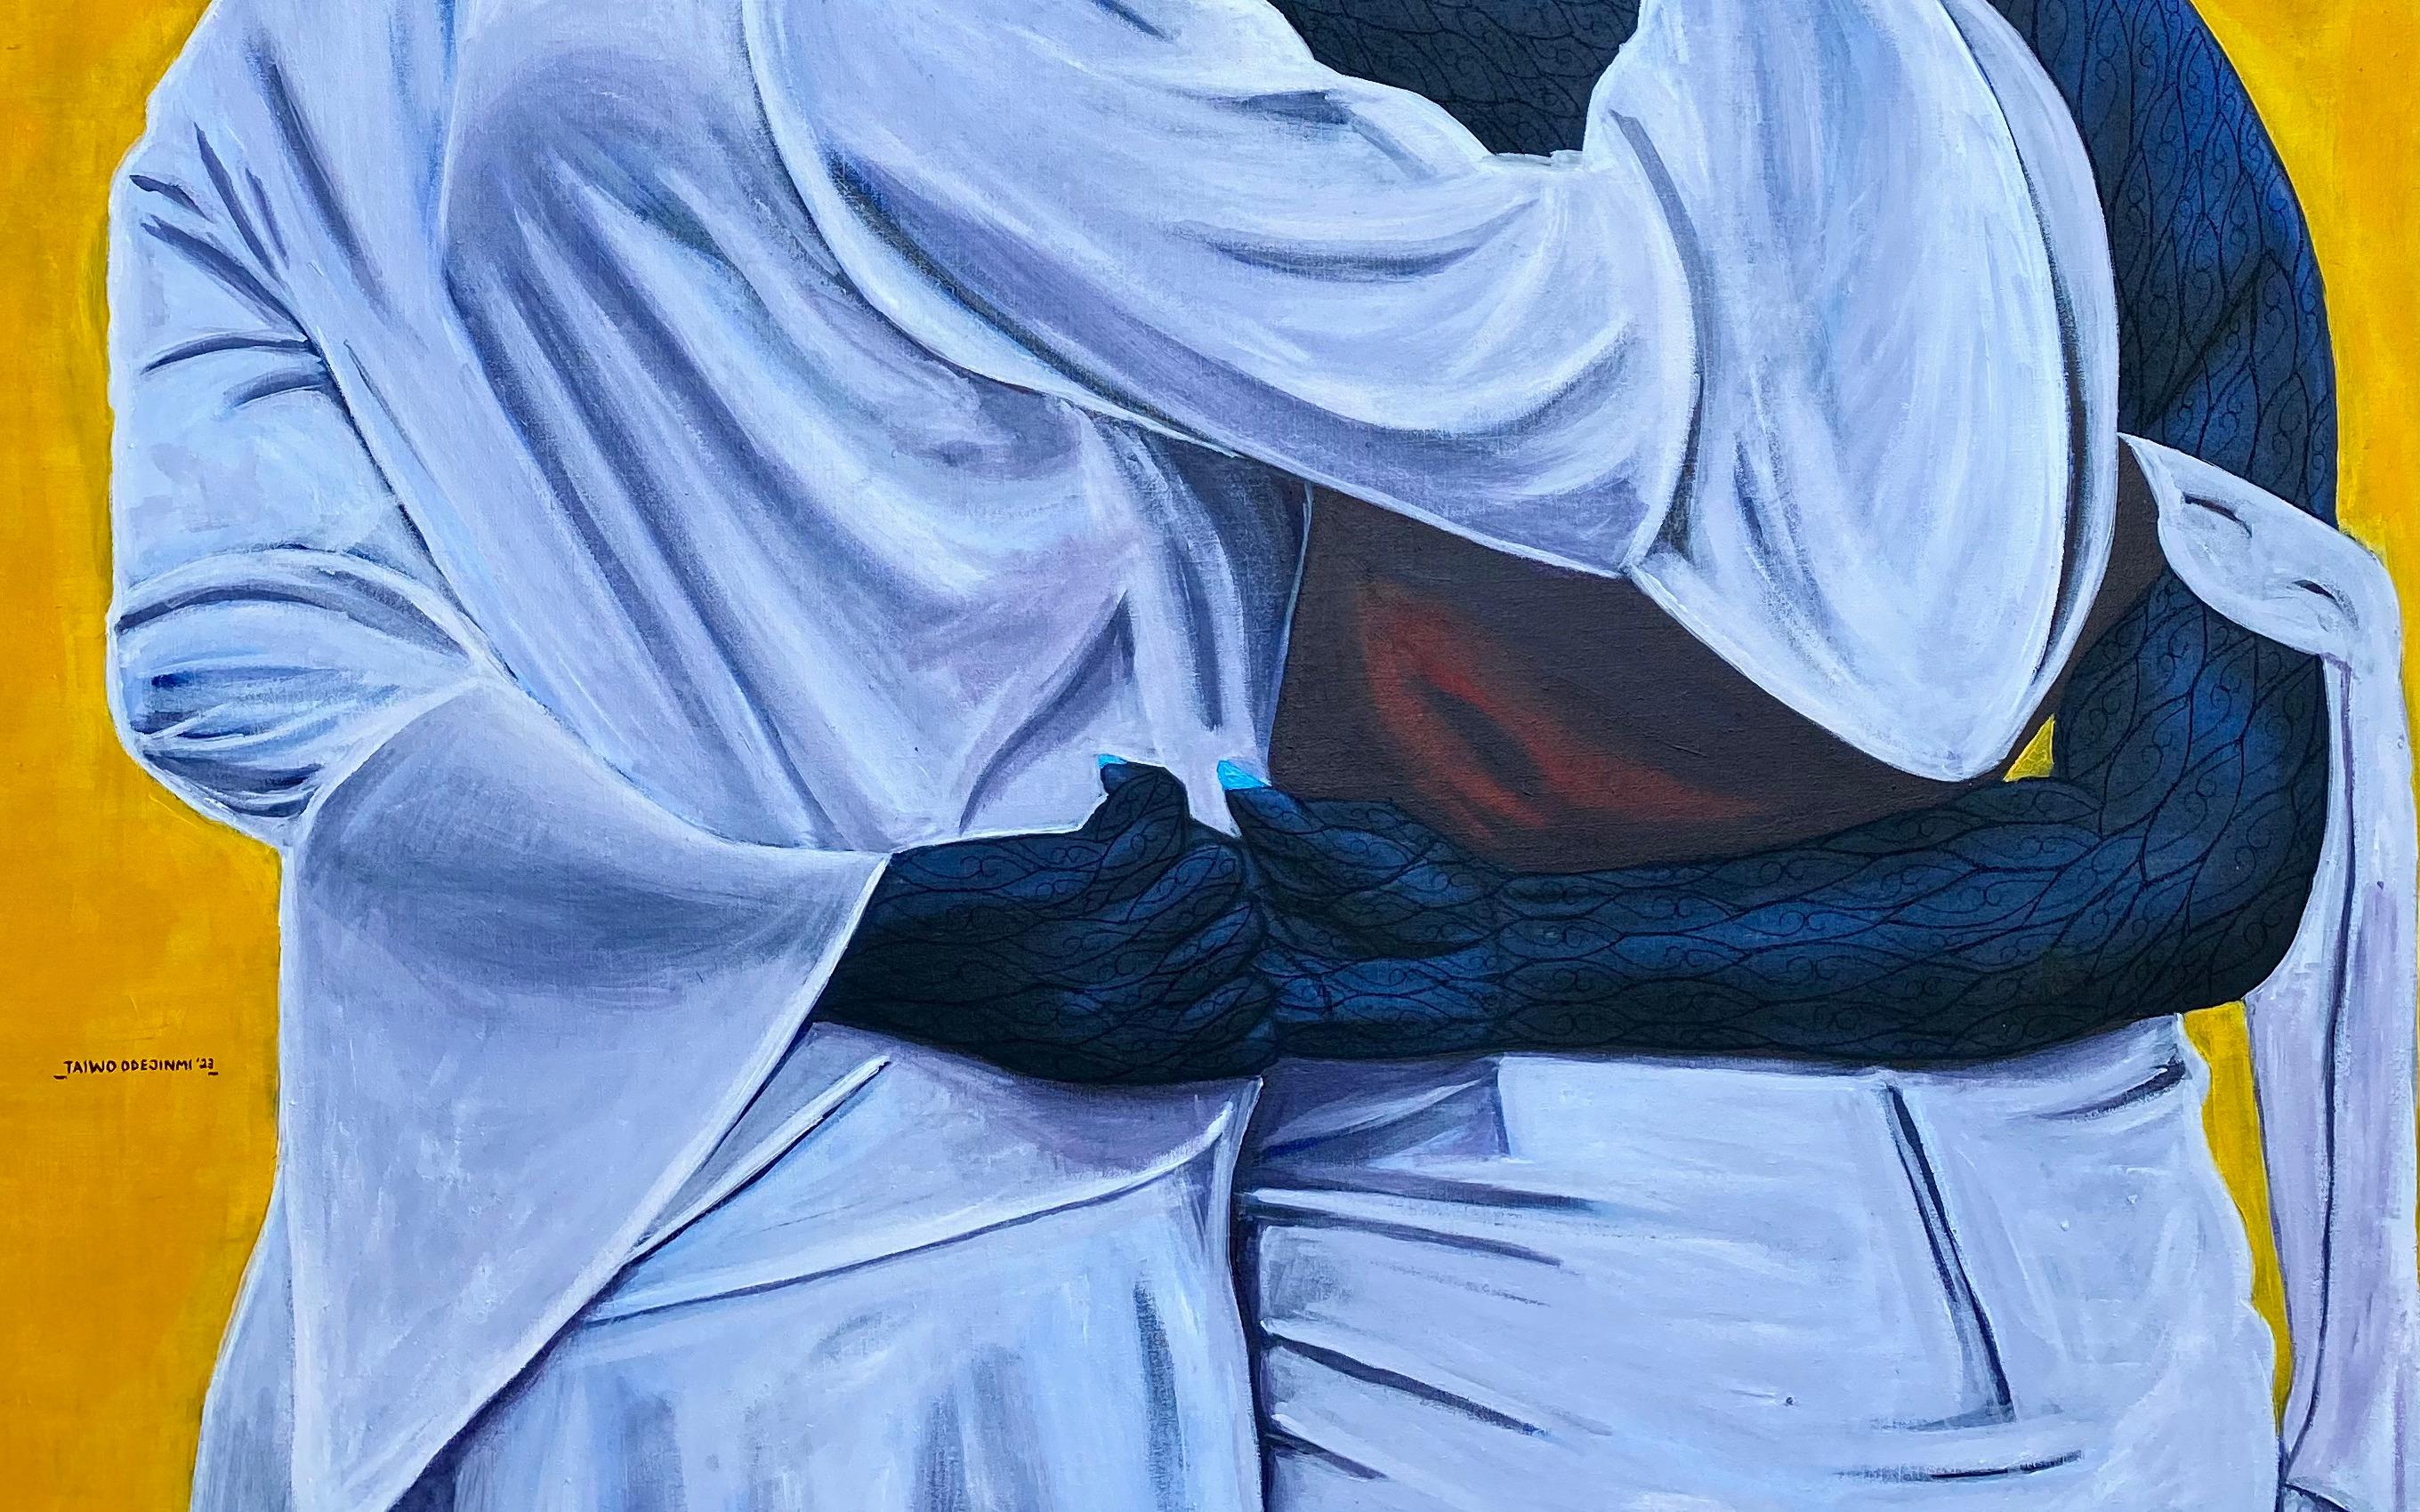 Sisterhood (The Love We Share) - Beige Portrait Painting by Taiwo Odejinmi